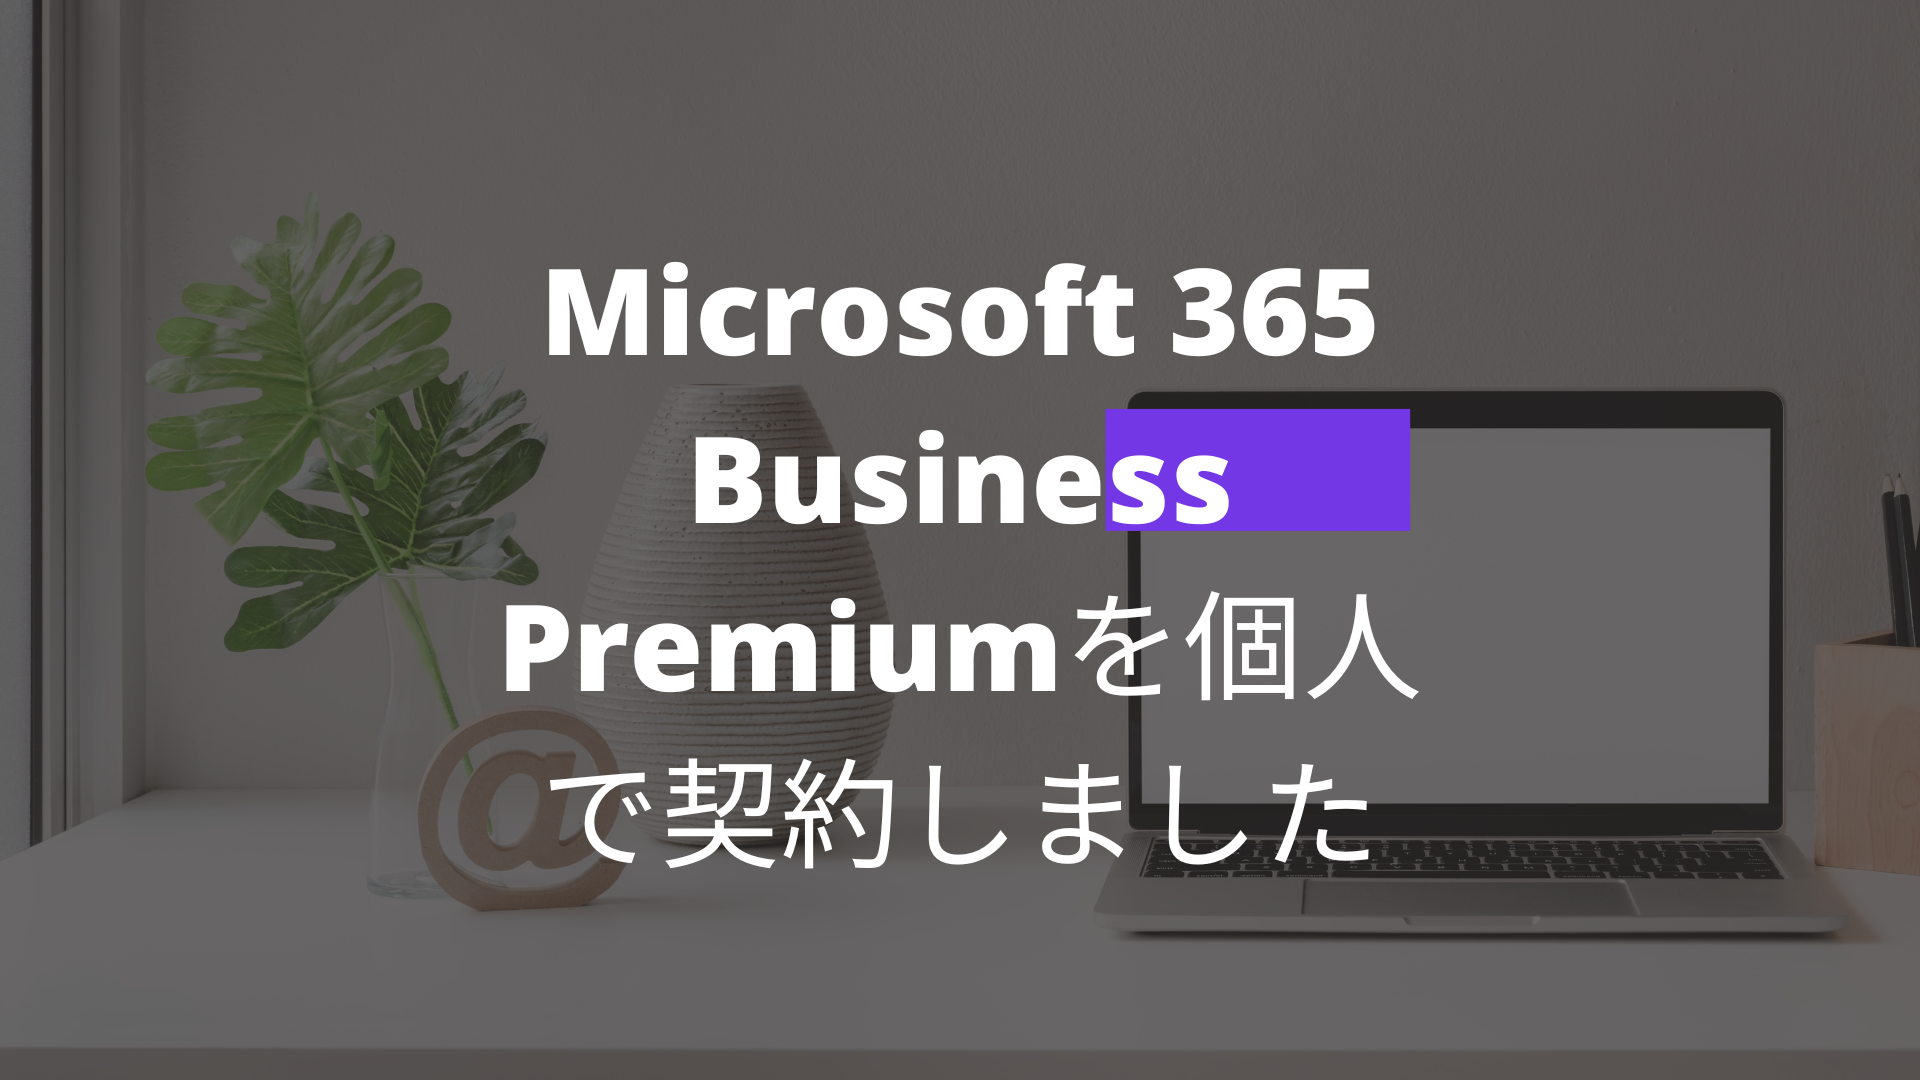 Microsoft 365 Business Premiumを個人で契約しました